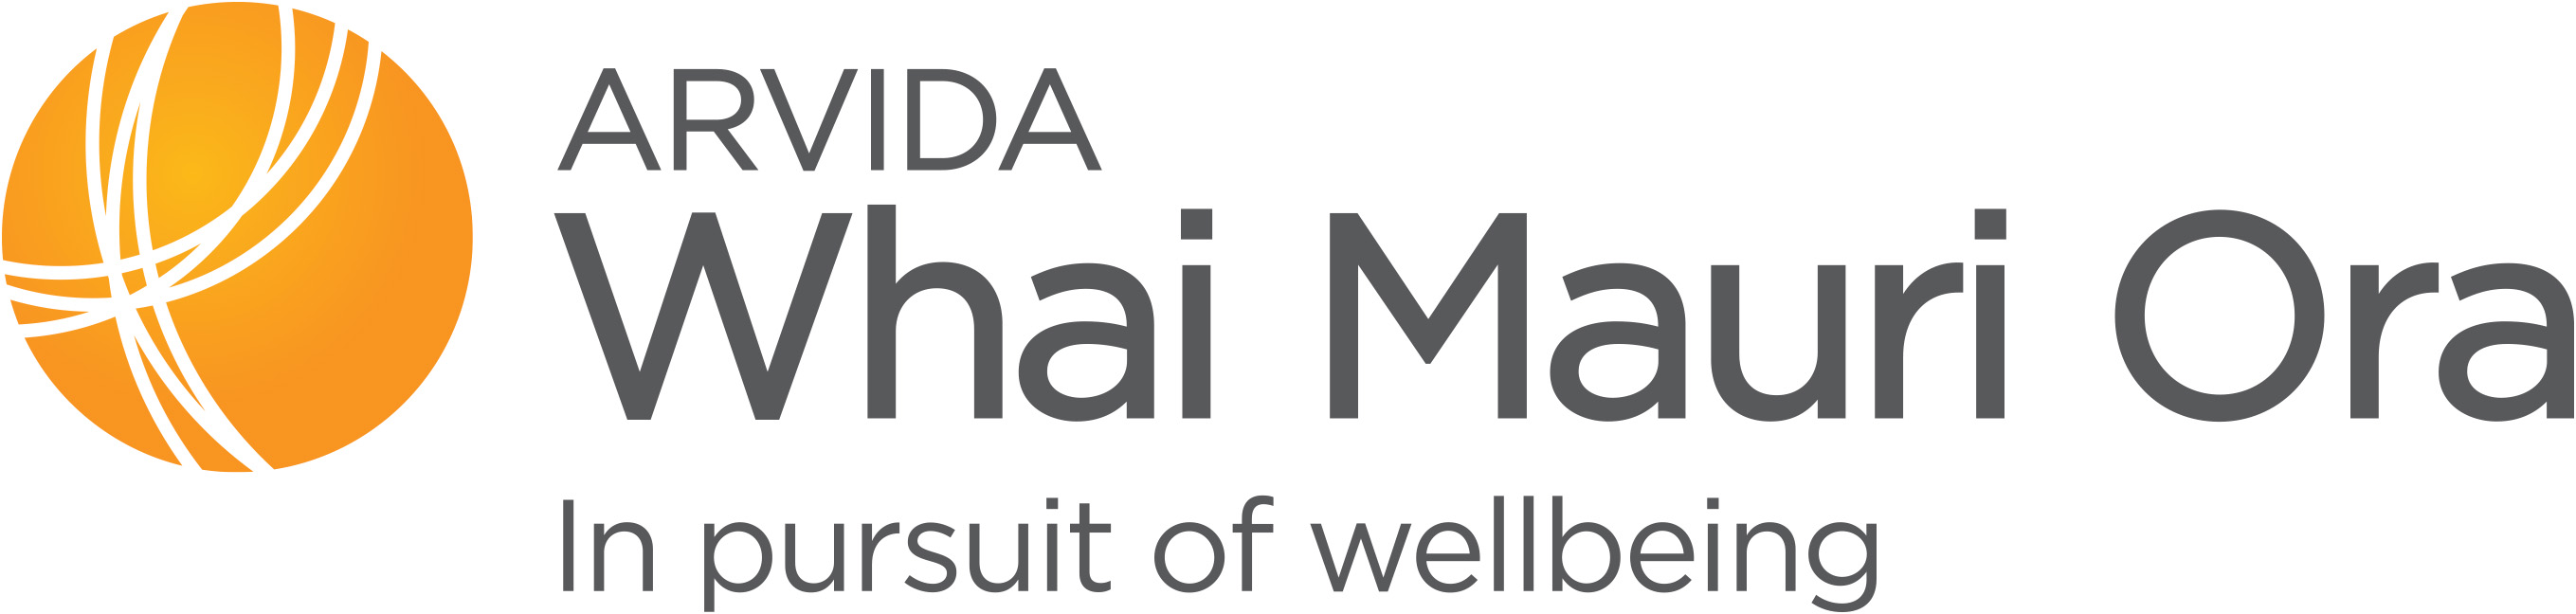 Whai Mauri Ora | Arvida logo